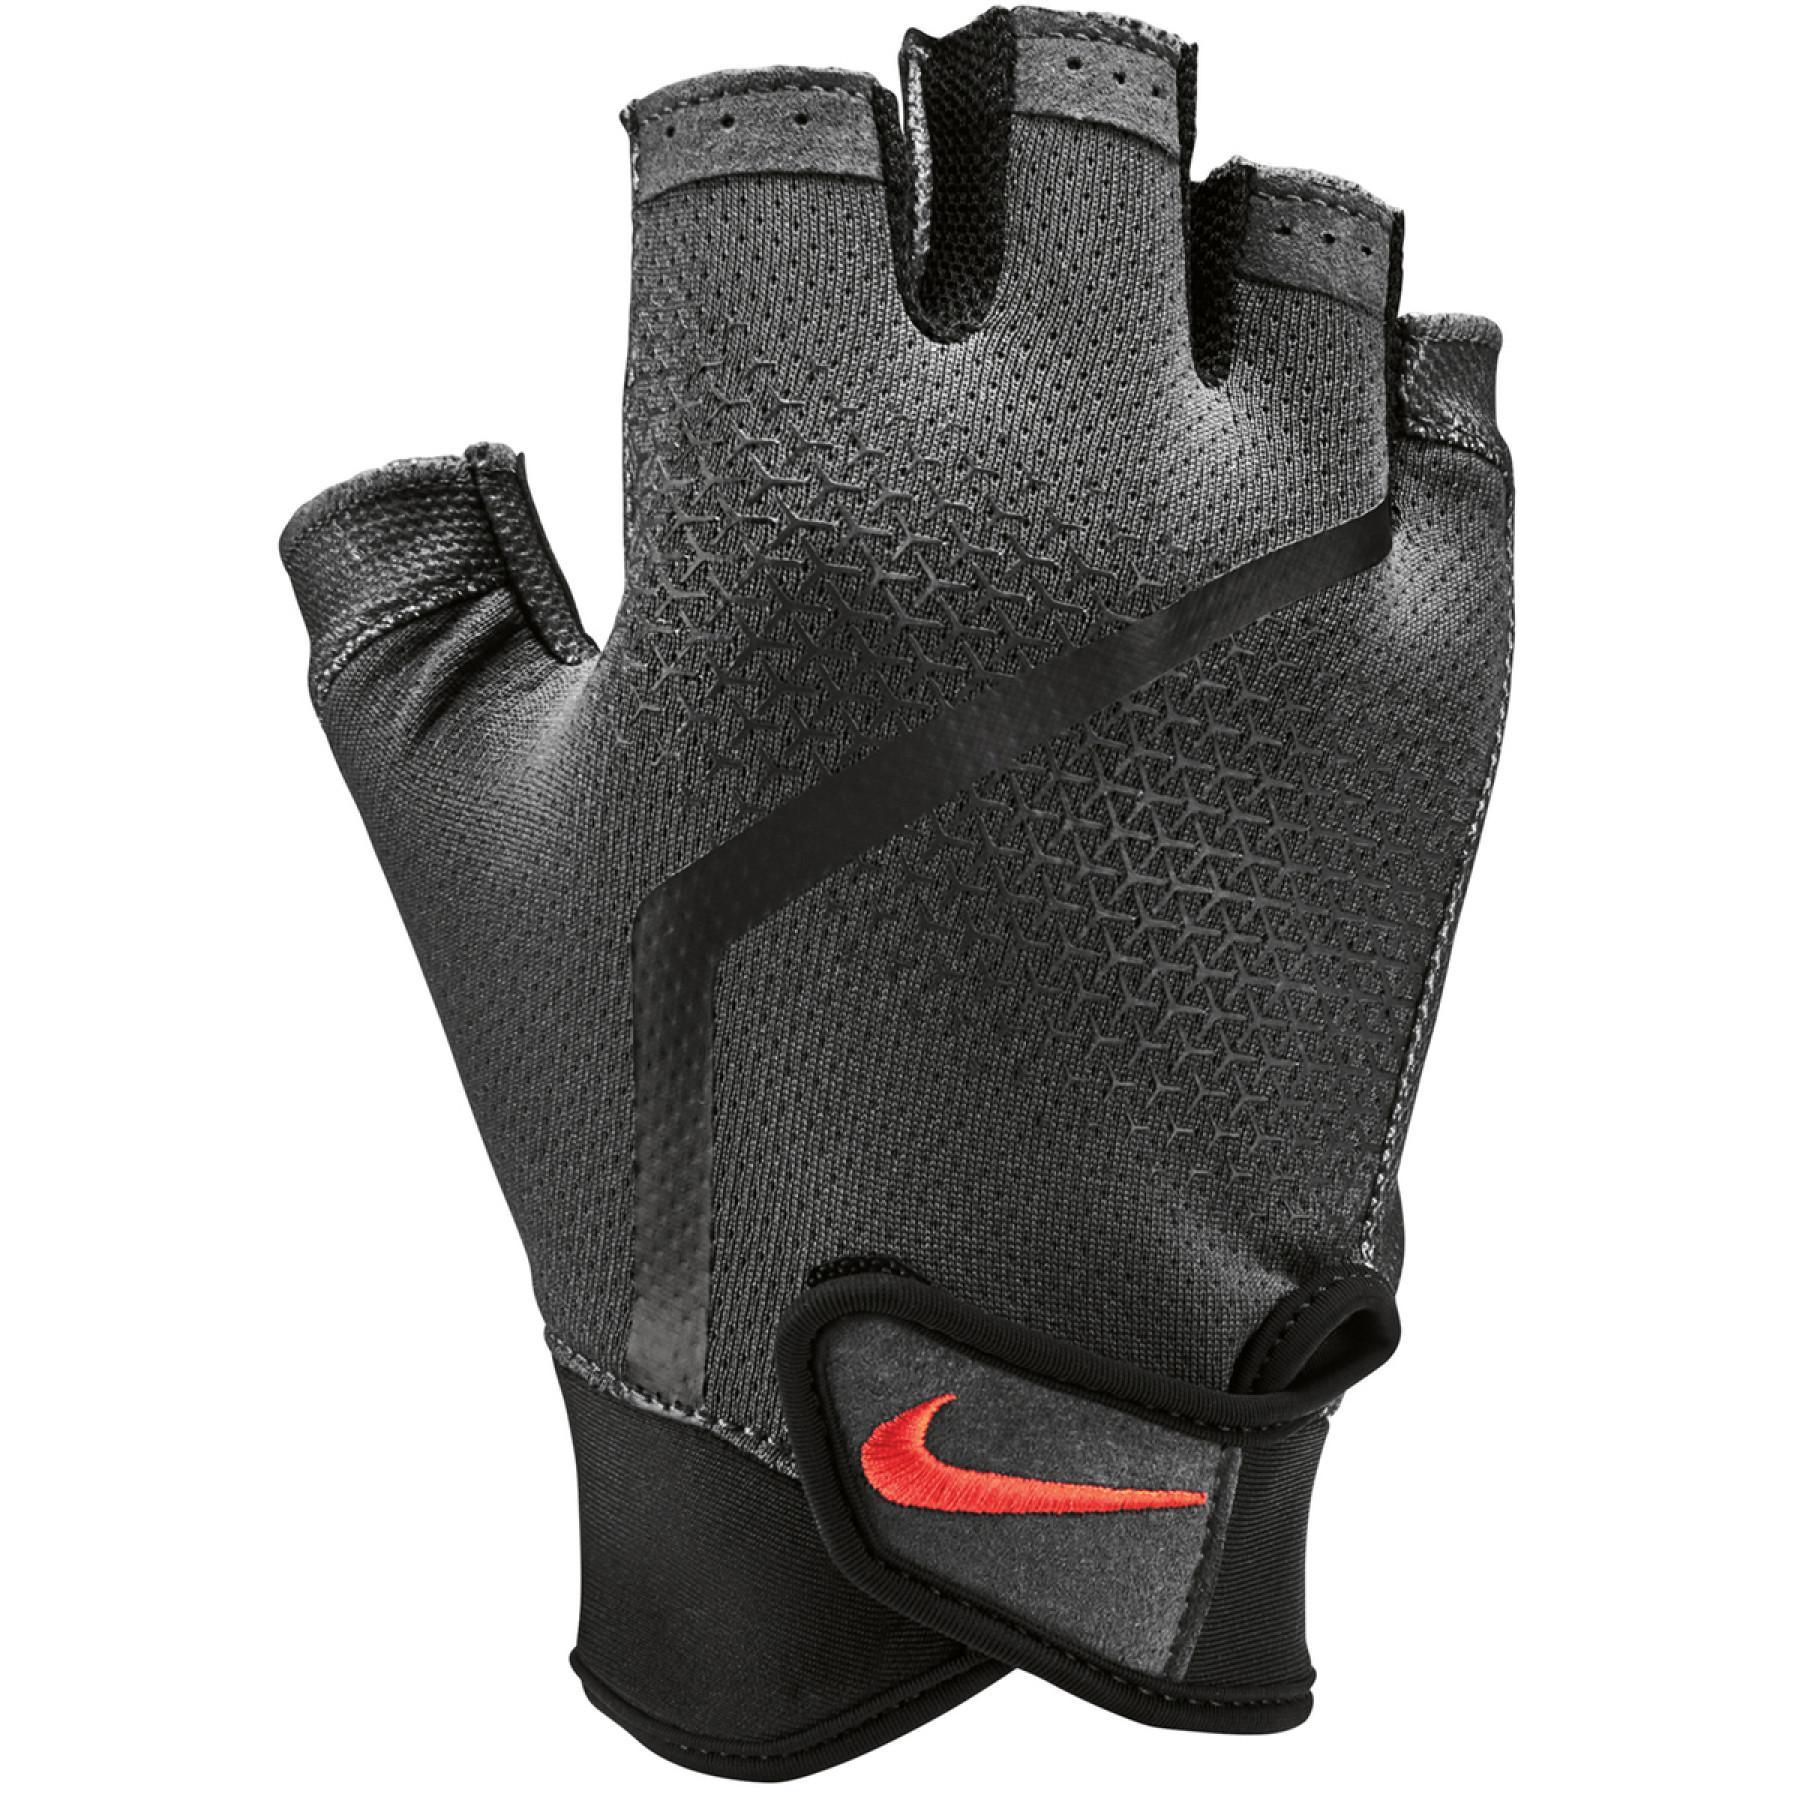 Handschuhe Nike extreme fitness